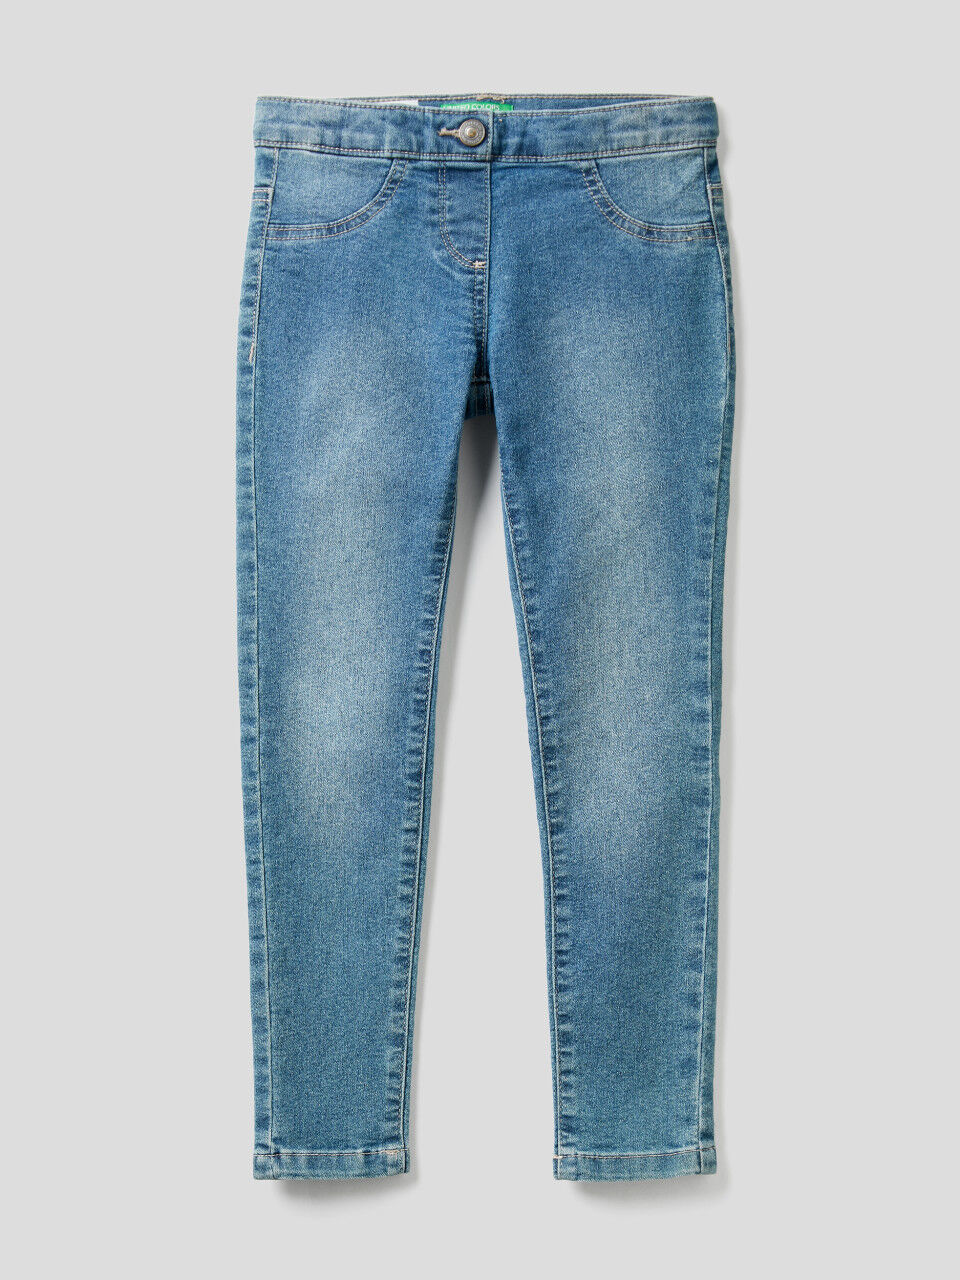 Cute Teen Girl jeans juniors plus denim skinny pants for Teen Girls acid  washed light dark blue - Walmart.com